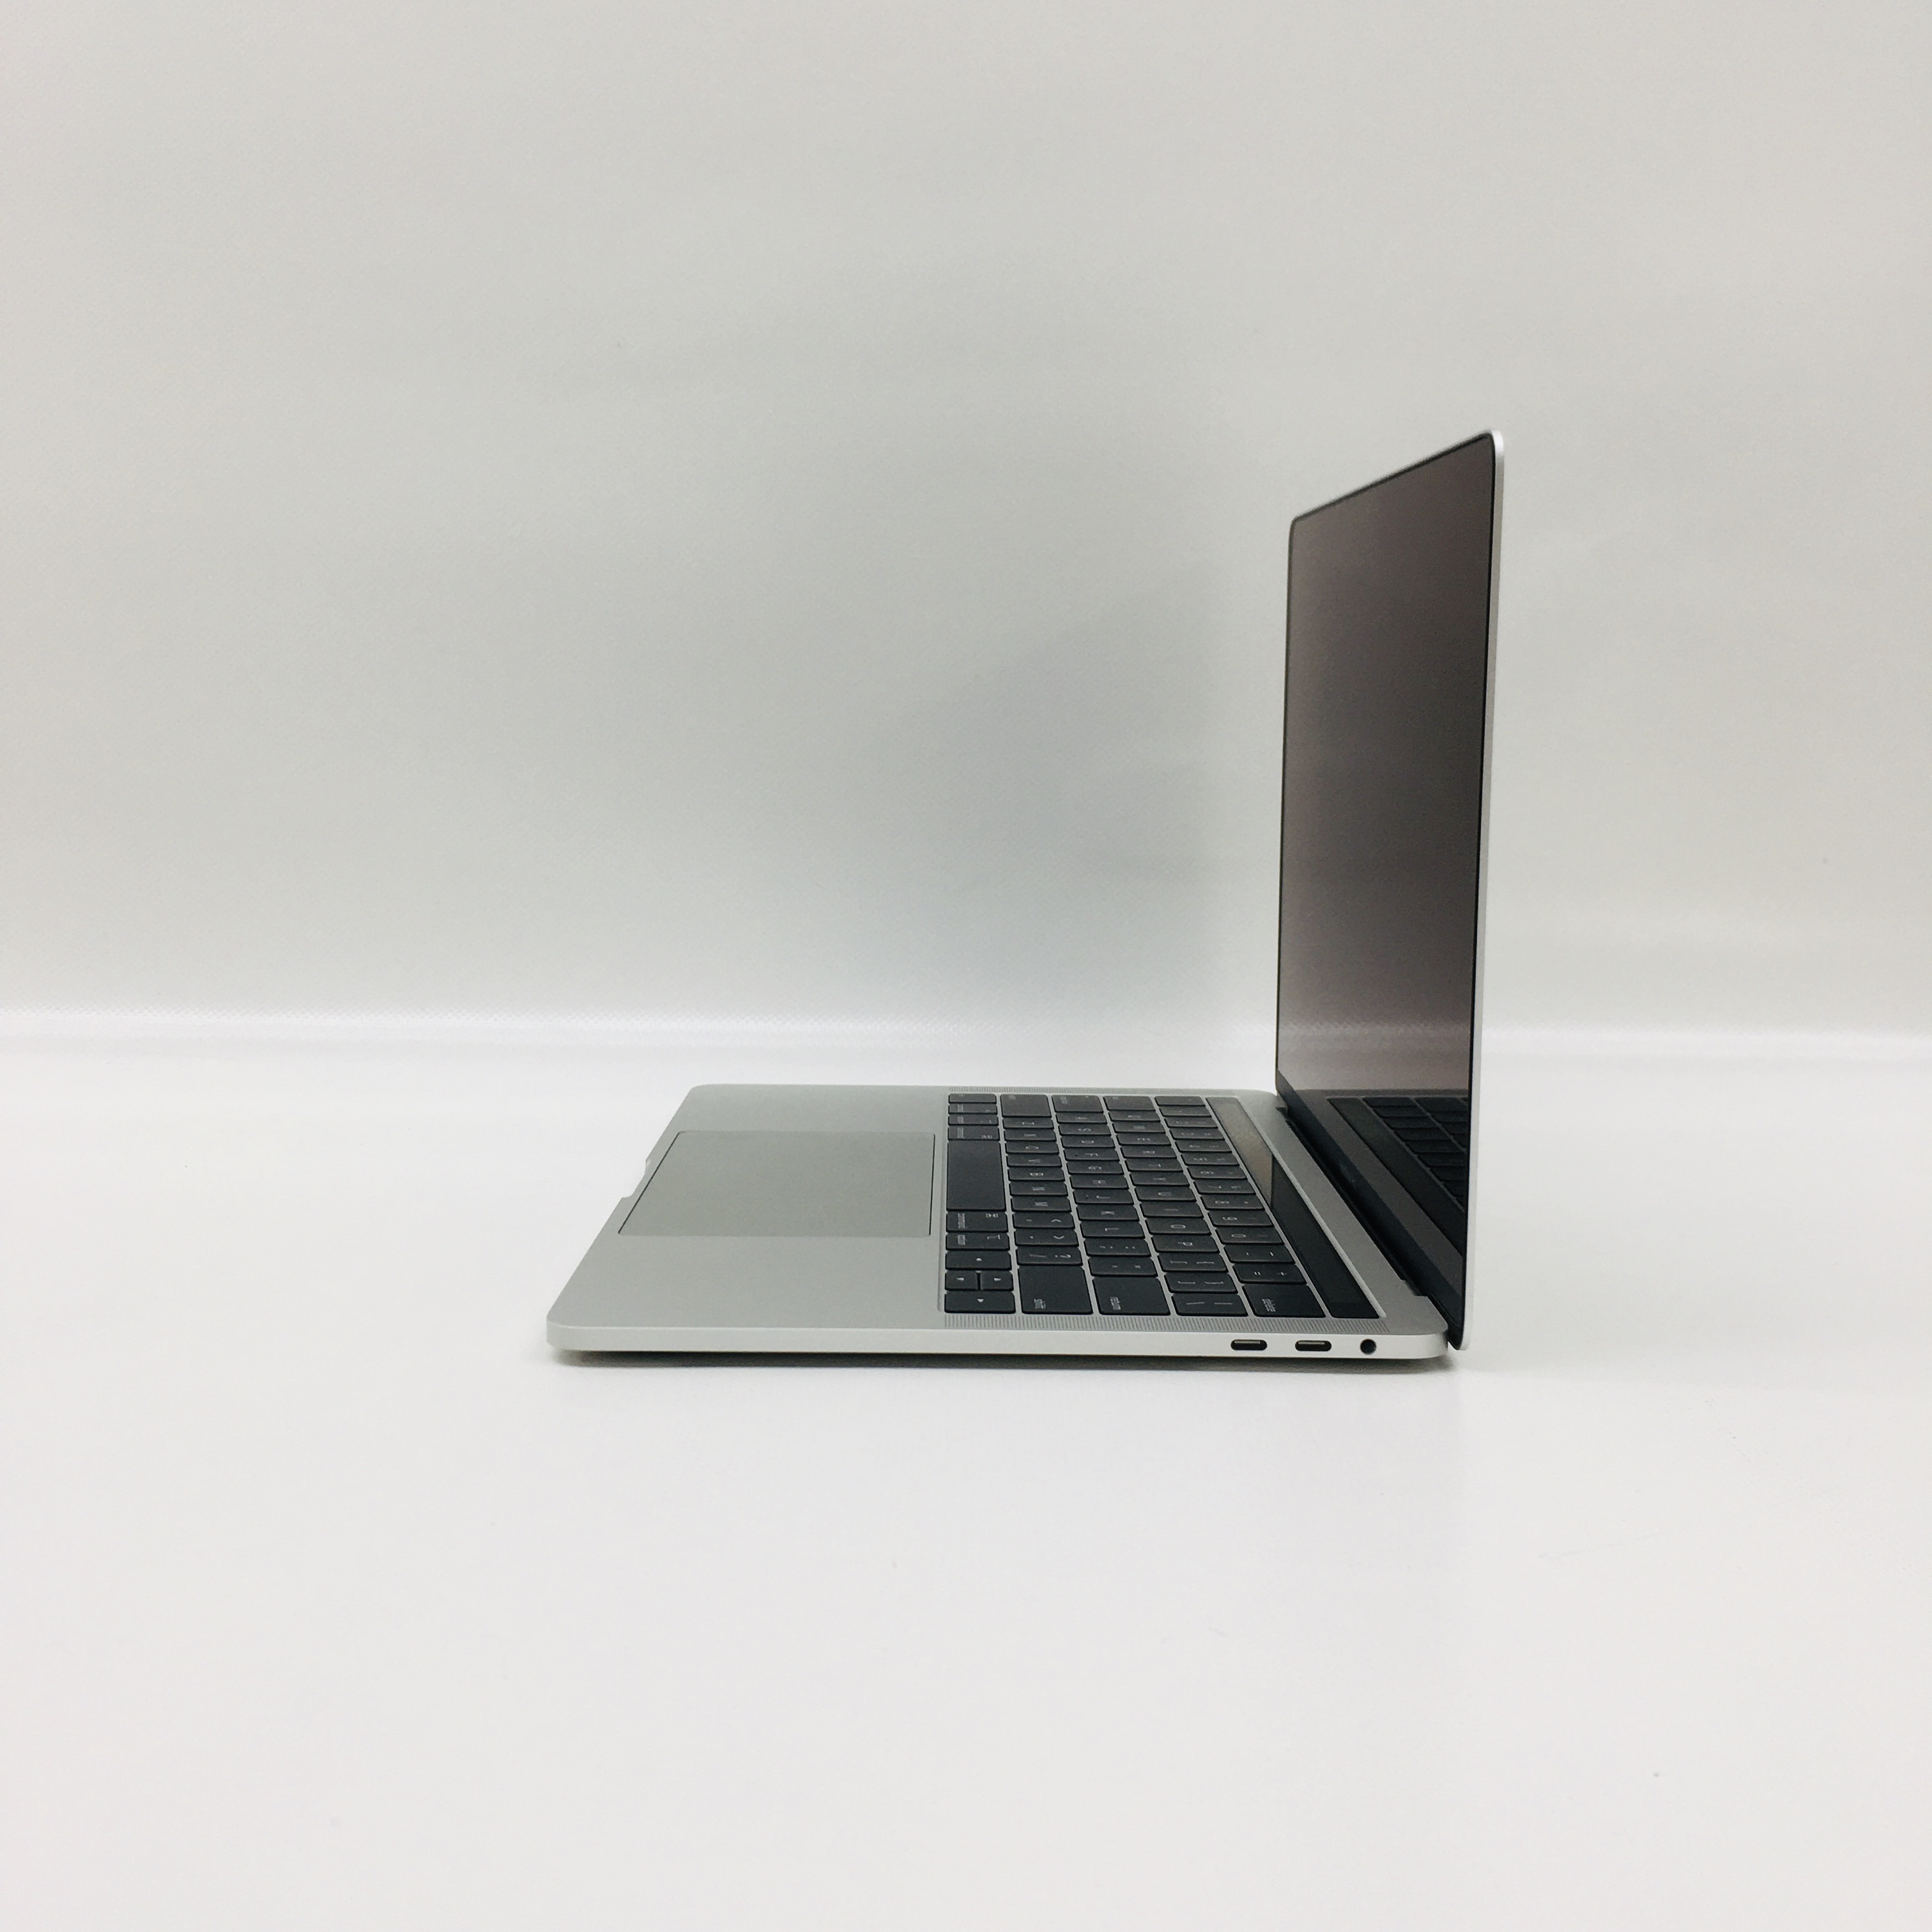 MacBook Pro 13" 4TBT Mid 2019 (Intel Quad-Core i5 2.4 GHz 8 GB RAM 256 GB SSD), Silver, Intel Quad-Core i5 2.4 GHz, 8 GB RAM, 256 GB SSD, image 3